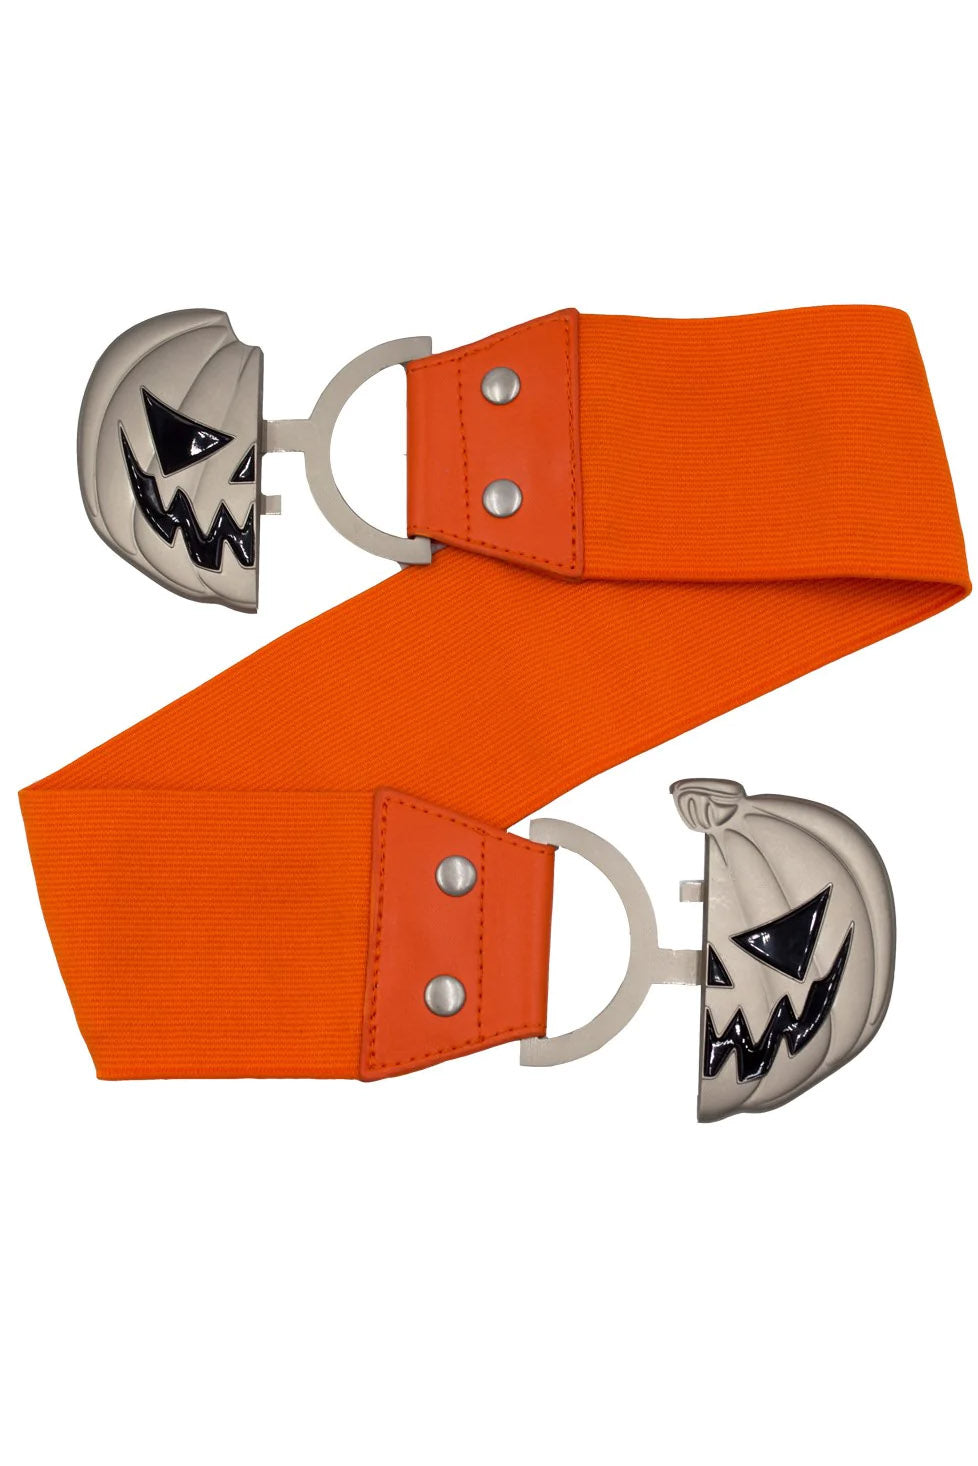 Trick Or Treat Pumpkin Belt [Orange]